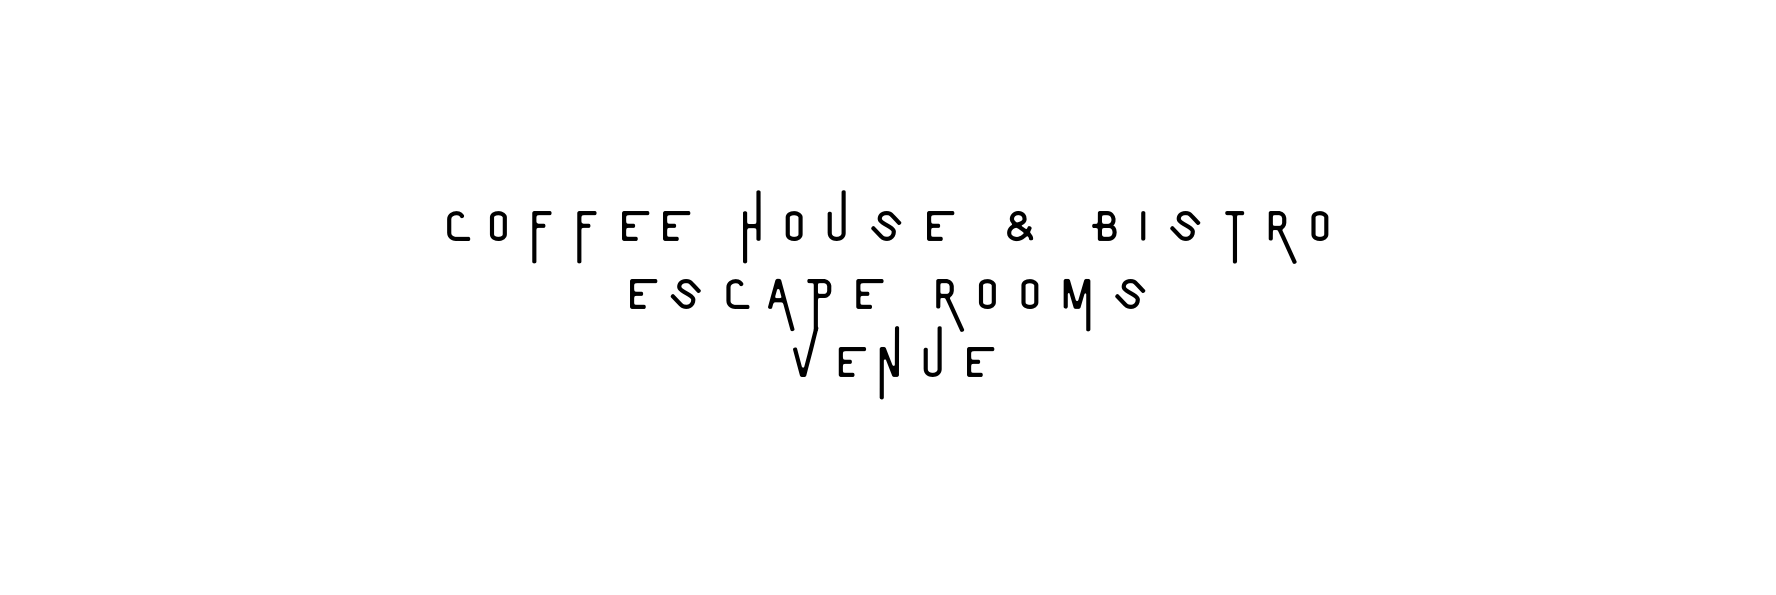 Coffee House Bistro Escape Rooms Venue